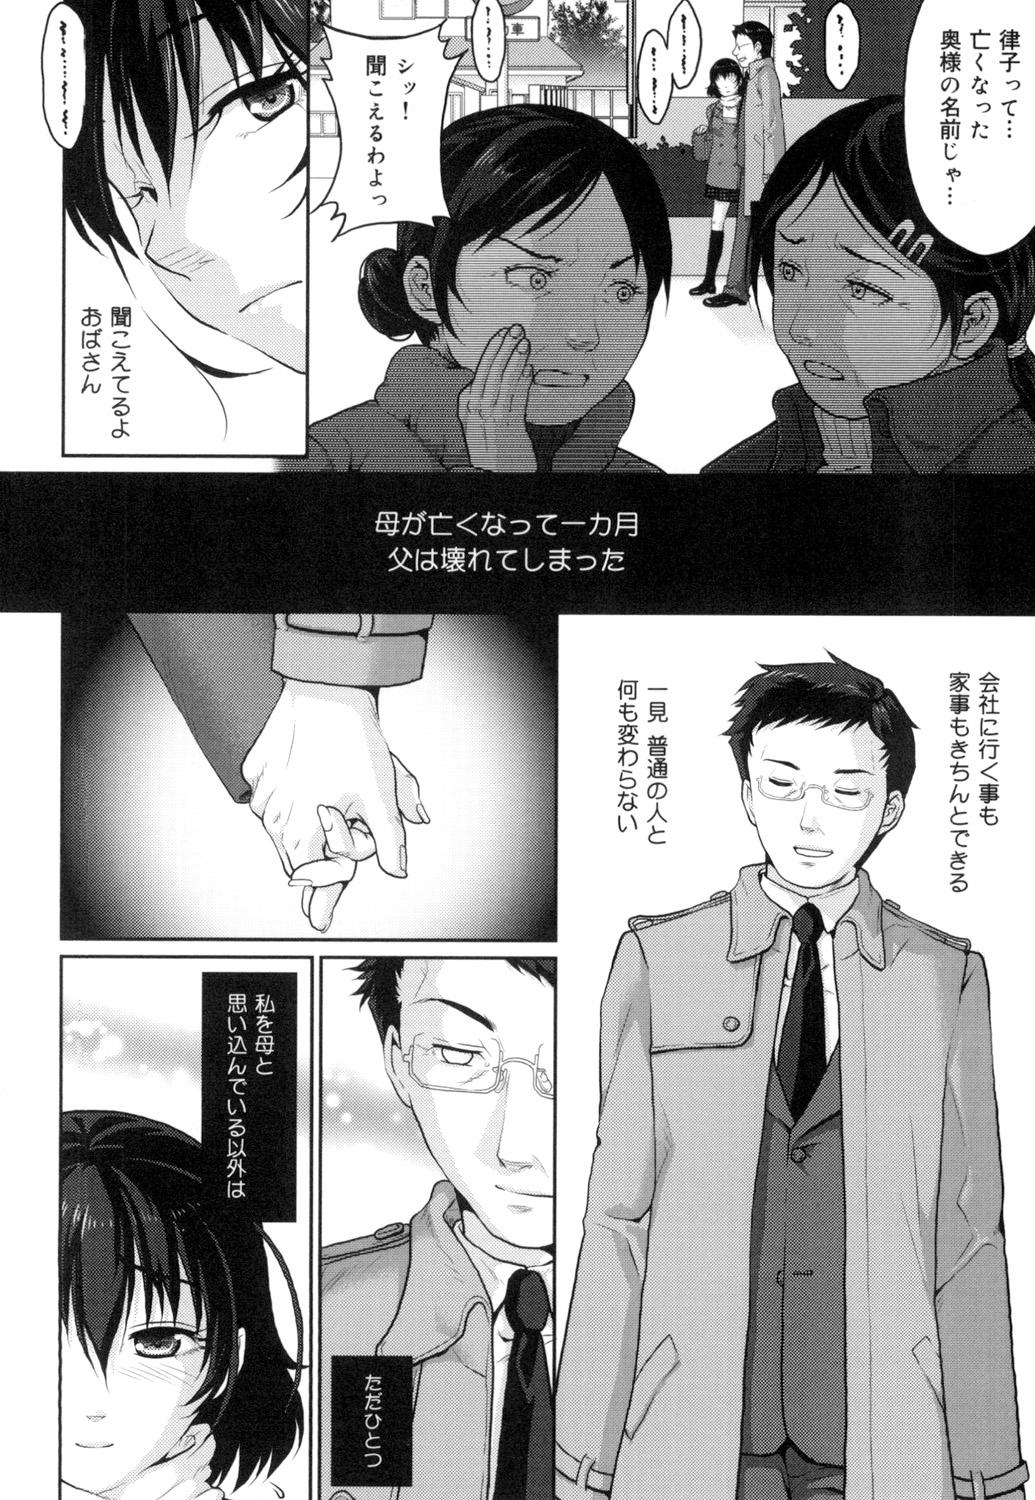 Police Binkan Sailor Shoukougun - Binkan Sailor Syndrome Argenta - Page 5